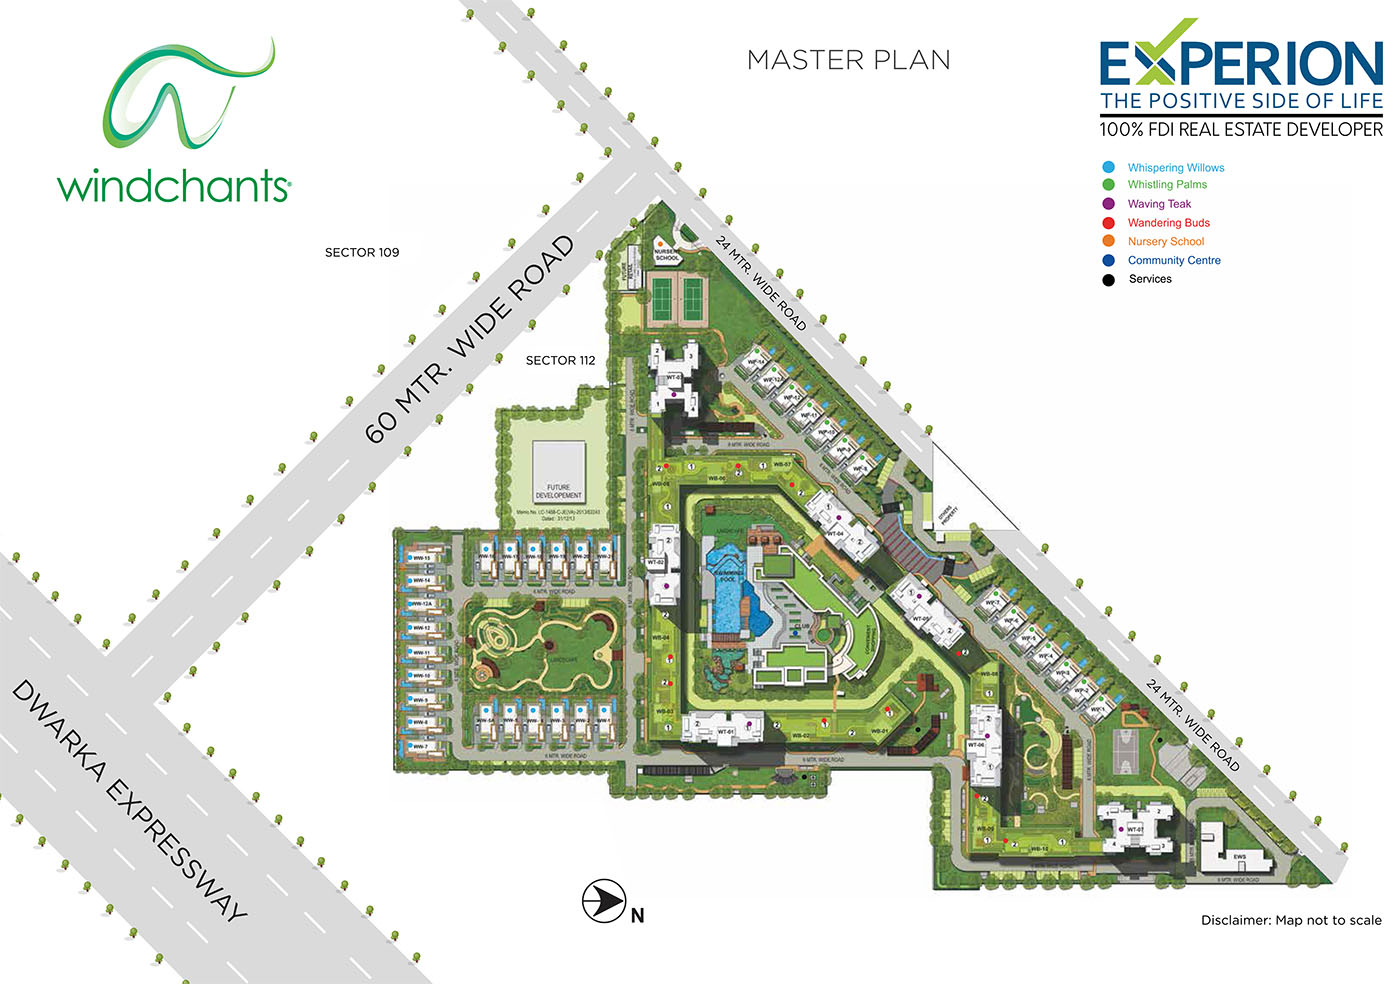 Master Plan of Experion Duplex Villaments